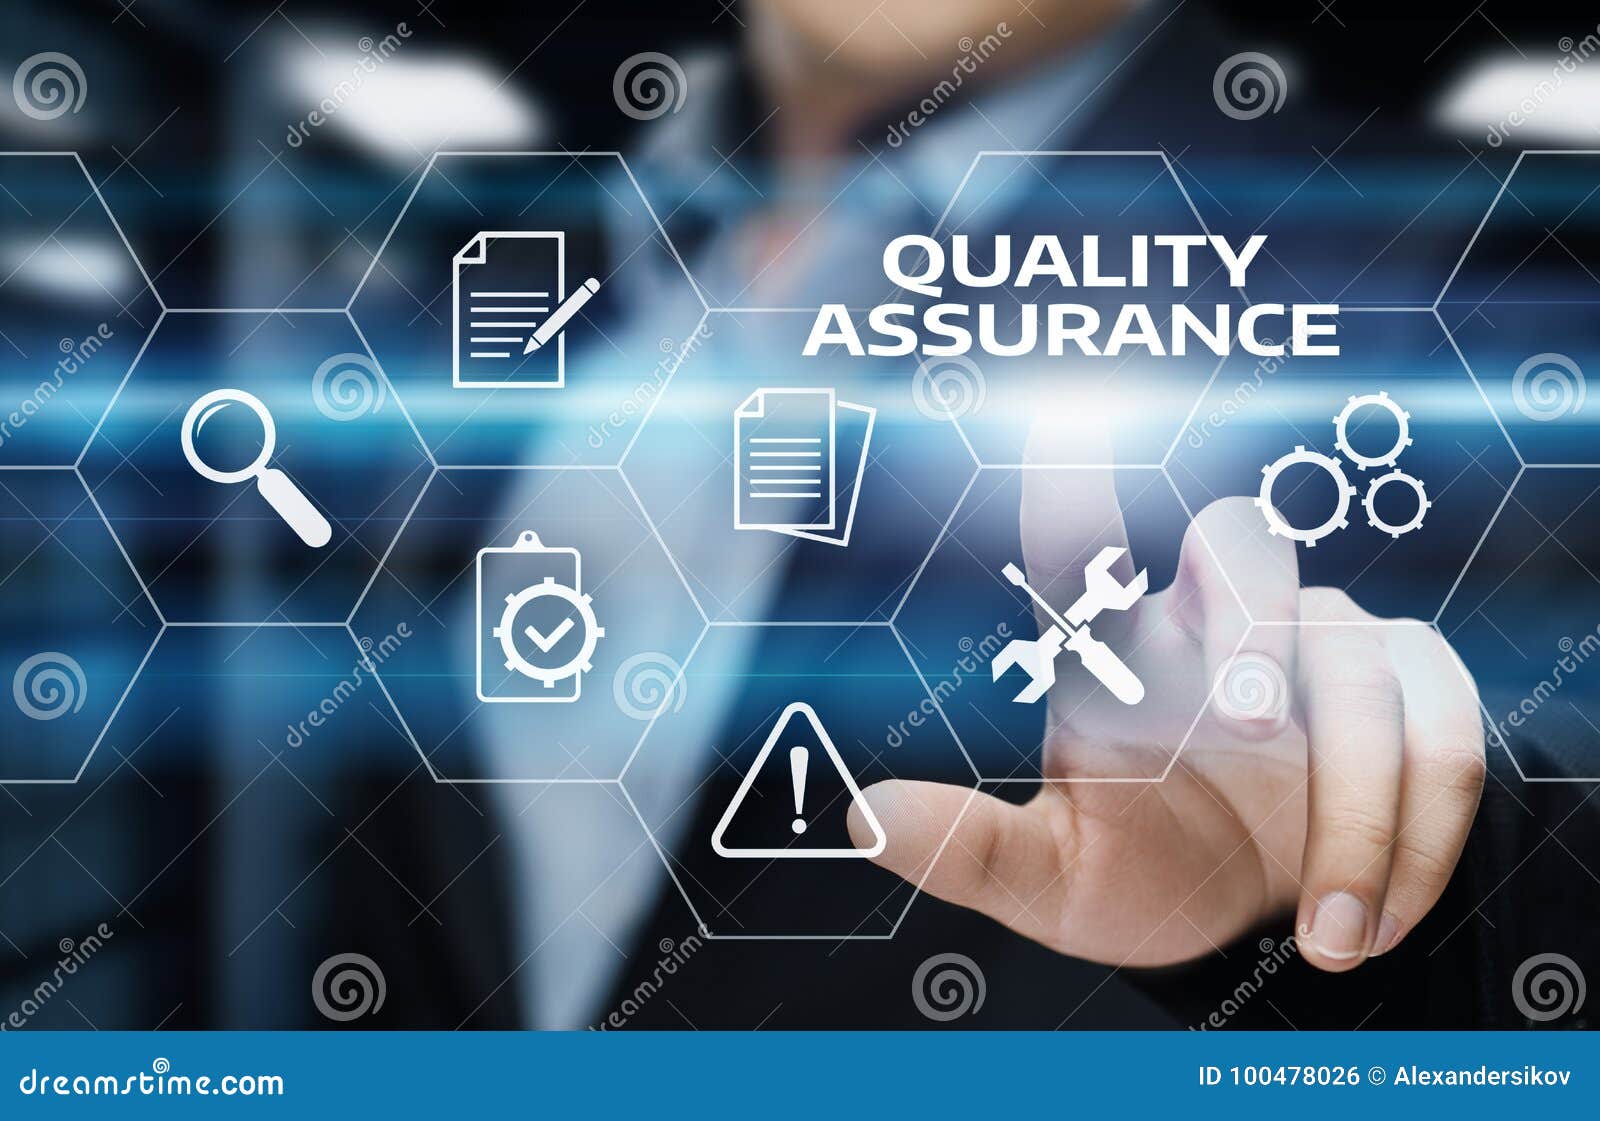 quality assurance service guarantee standard internet business technology concept